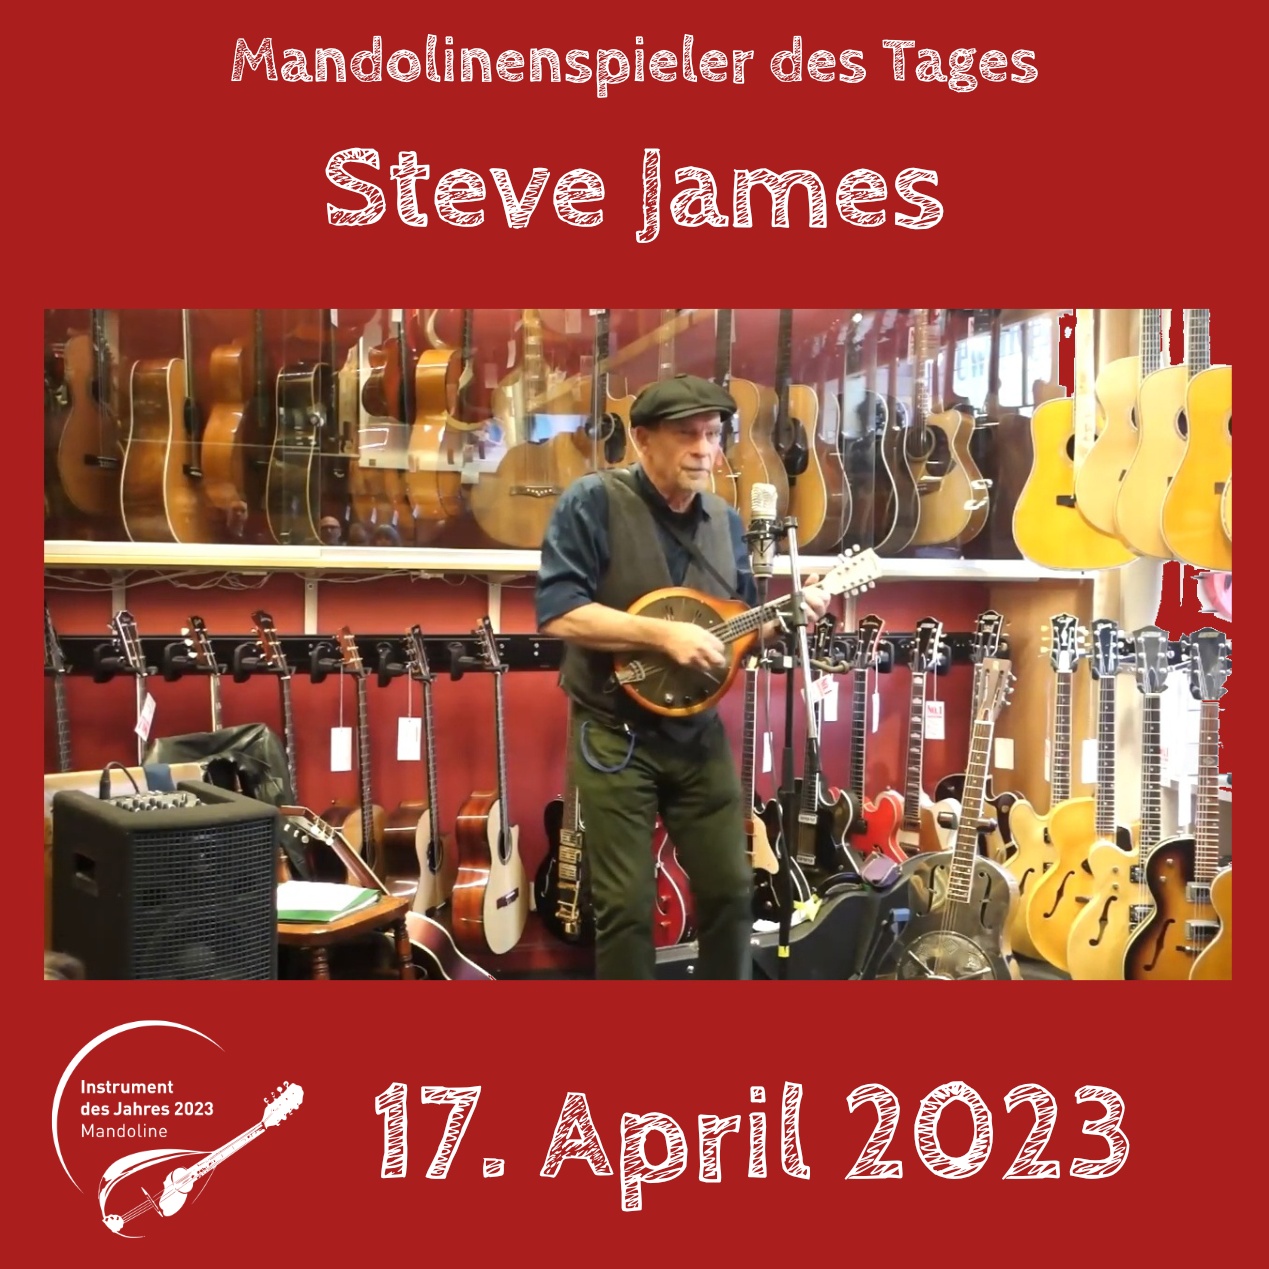 Steve James Instrument des Jahres 2023 Mandolinenspieler Mandolinenspielerin des Tages